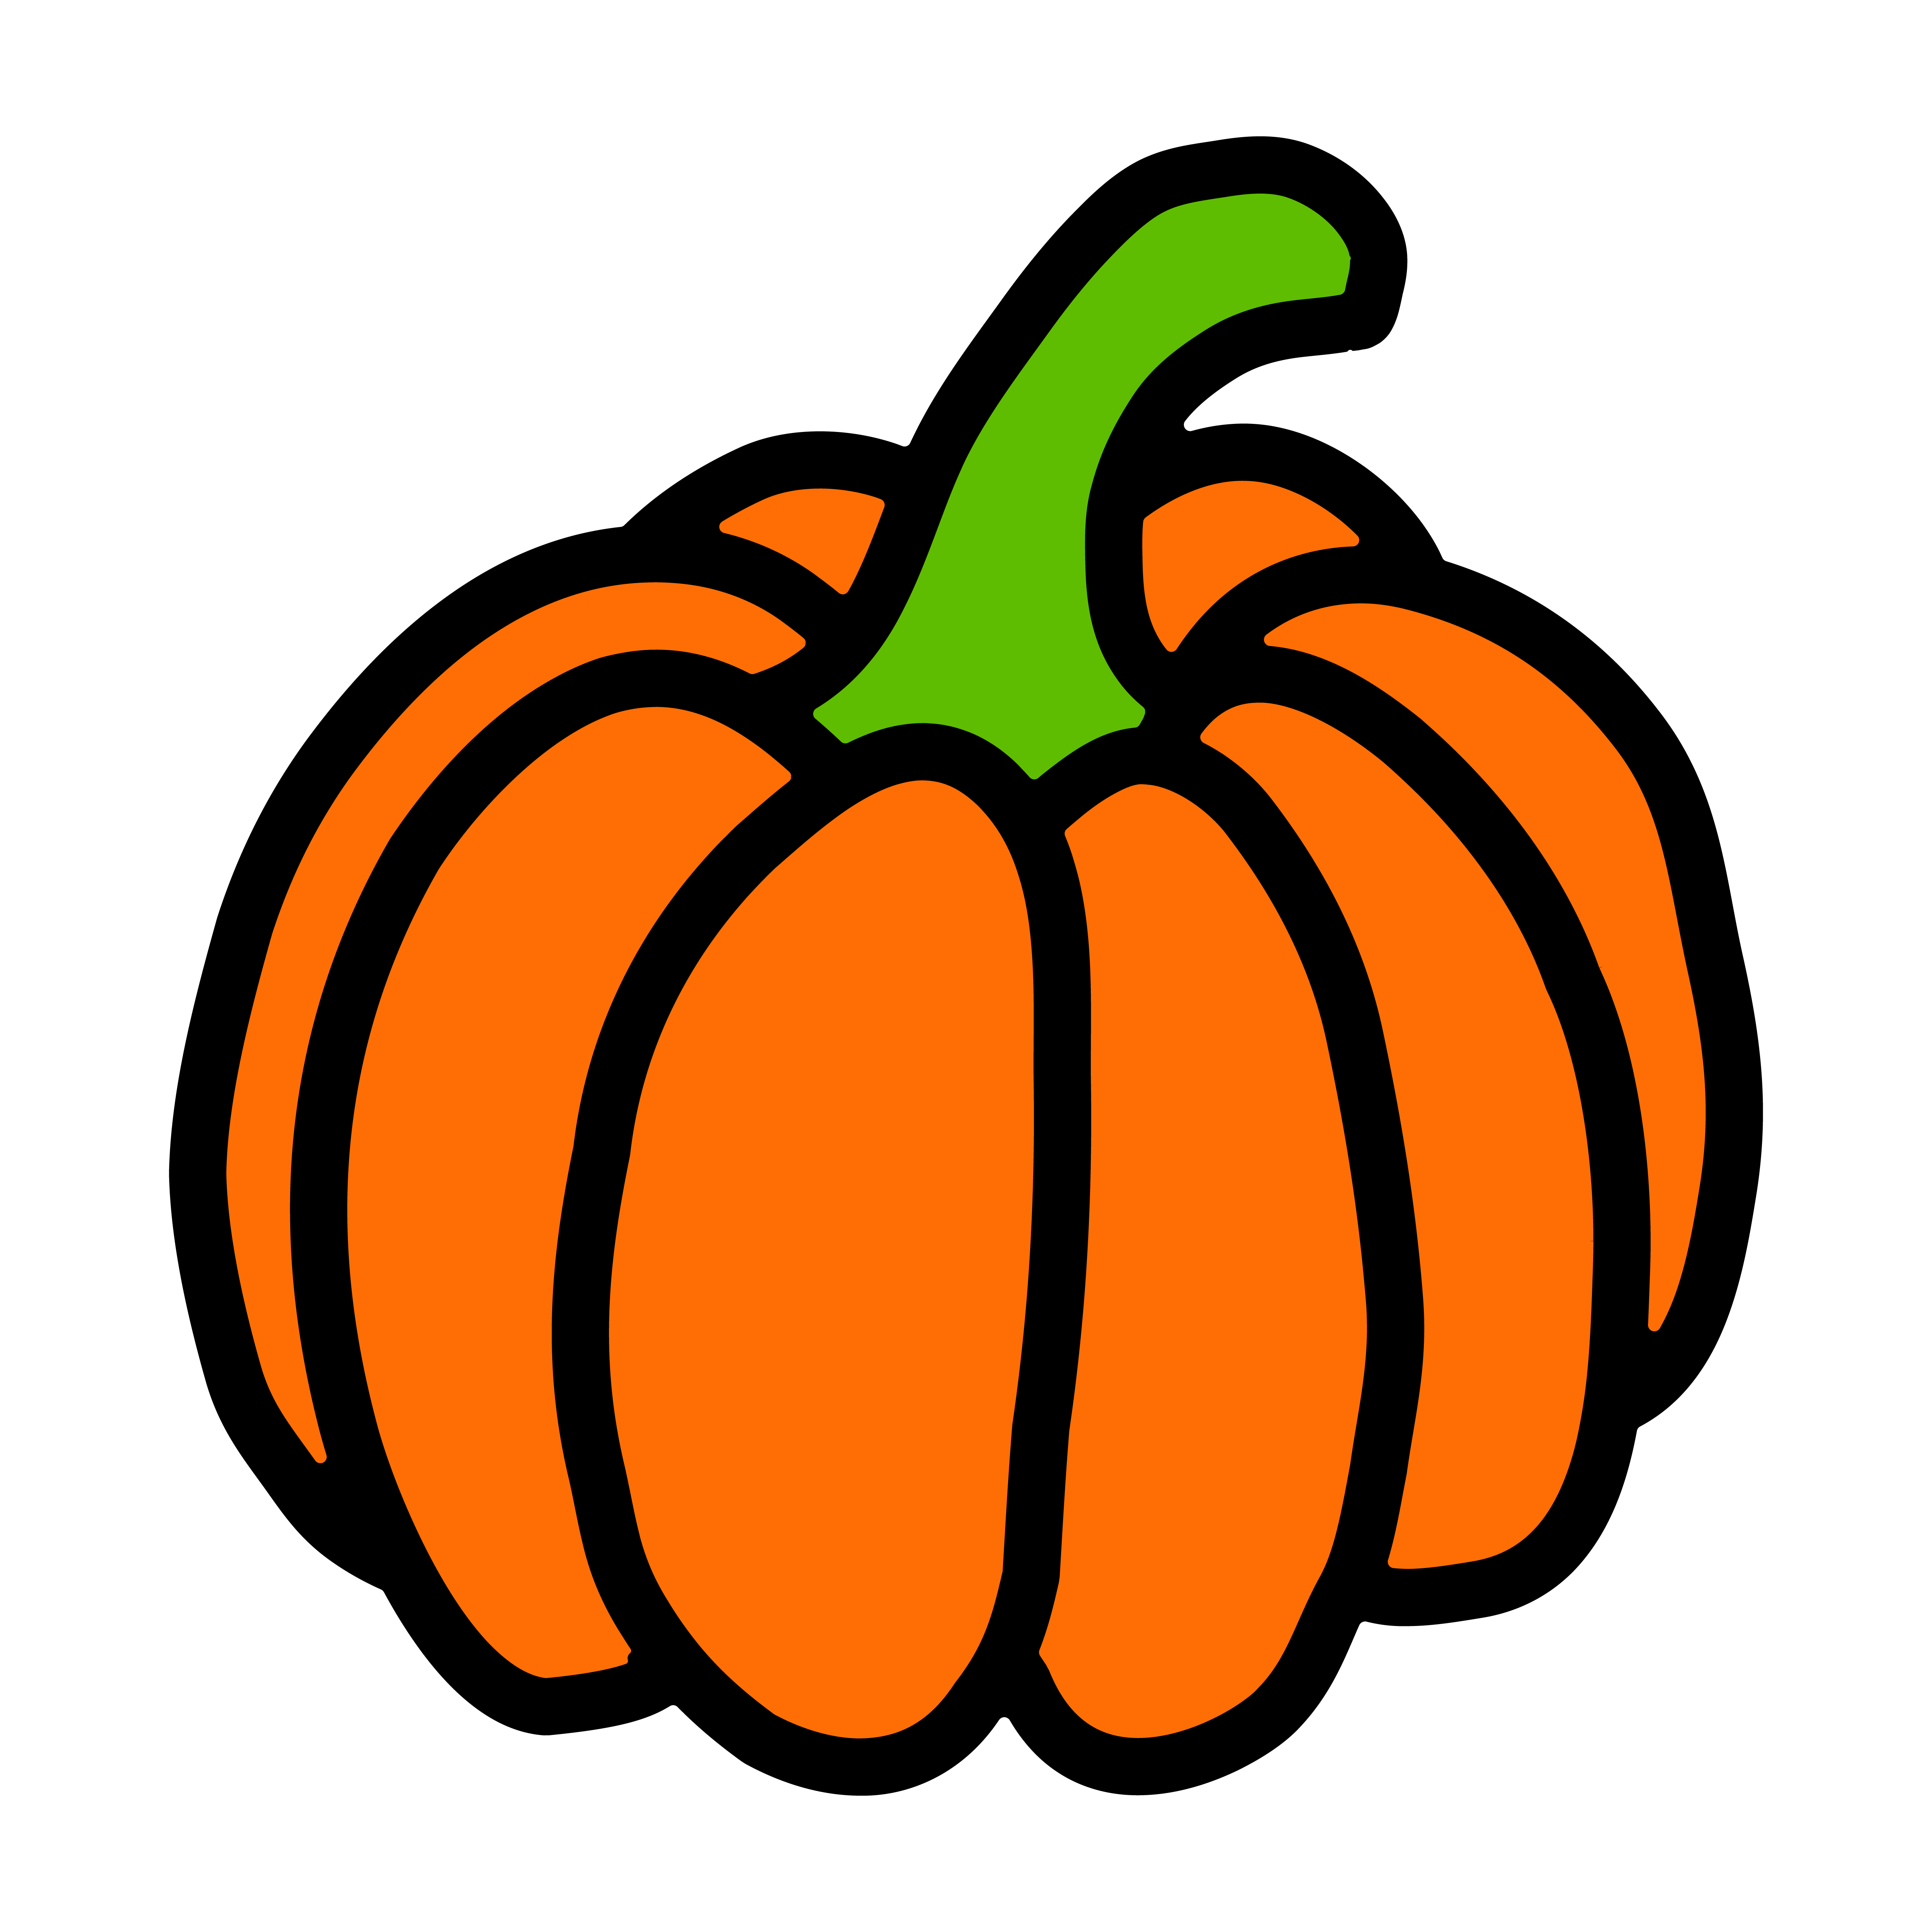 Download Pumpkin Vector Icon 553007 - Download Free Vectors, Clipart Graphics & Vector Art